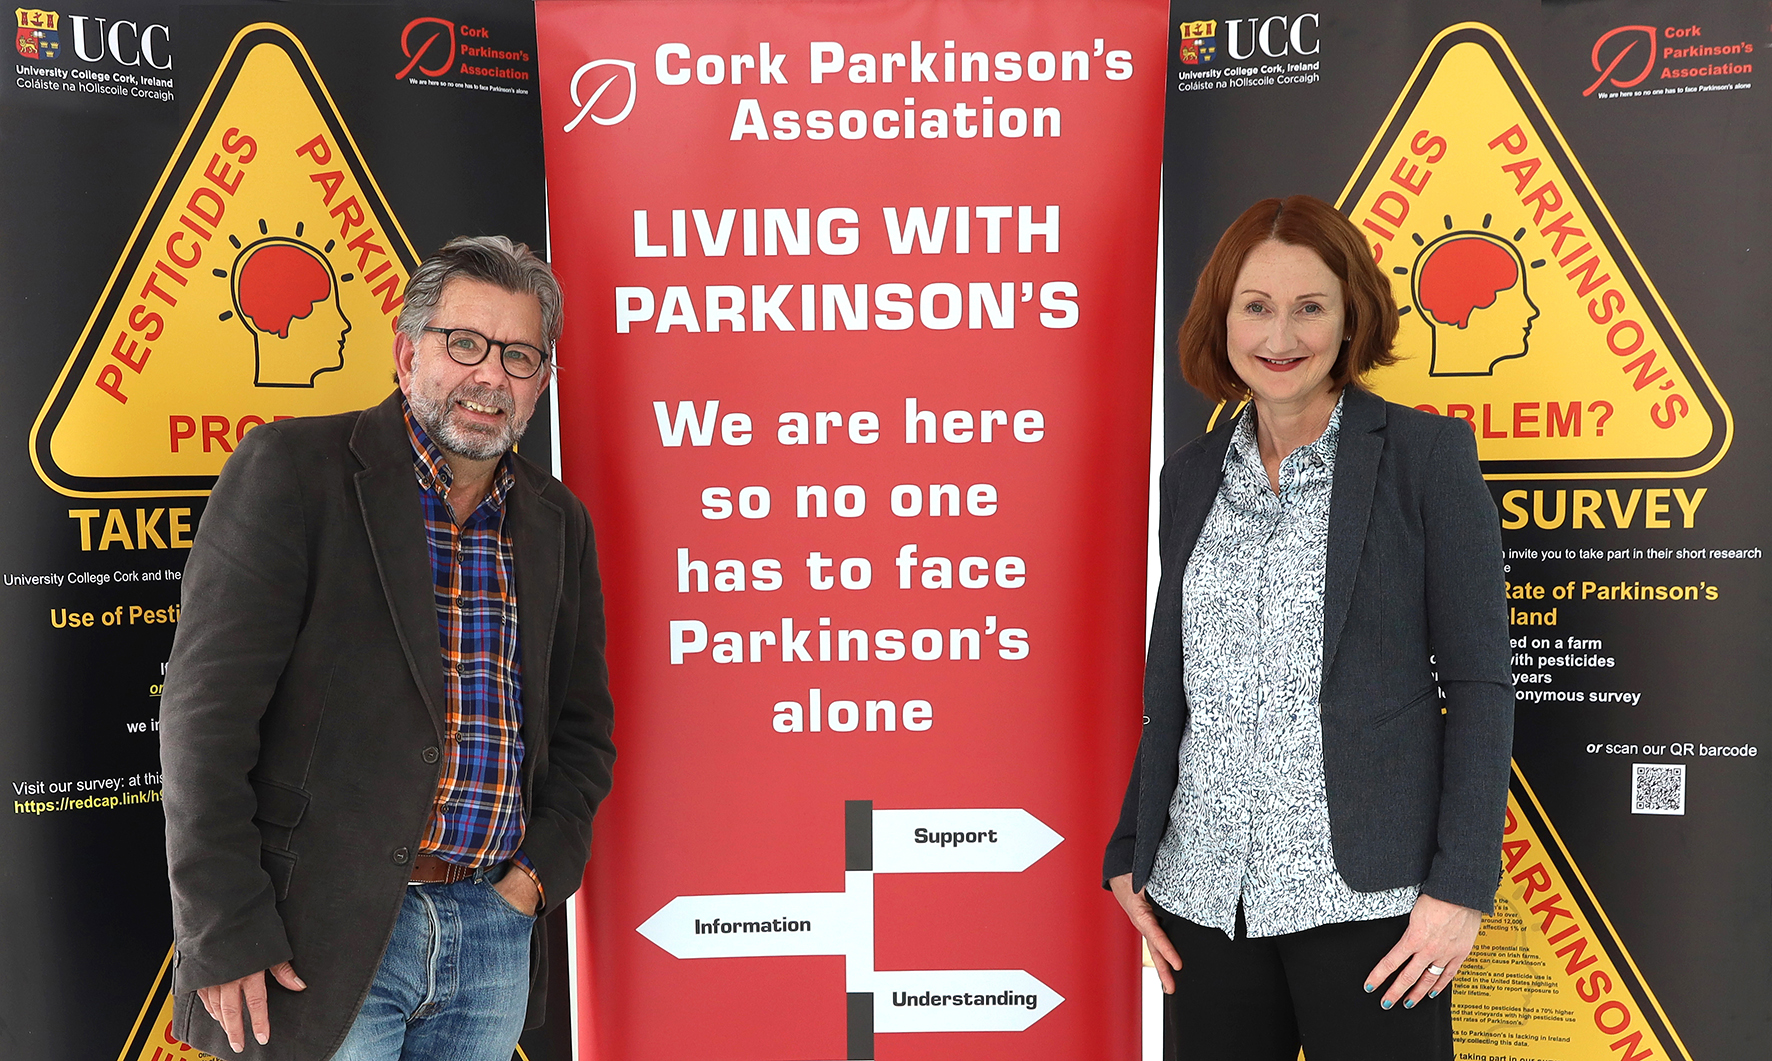 Cork Parkinson's Association collaborates with UCC Parkinson's Research team